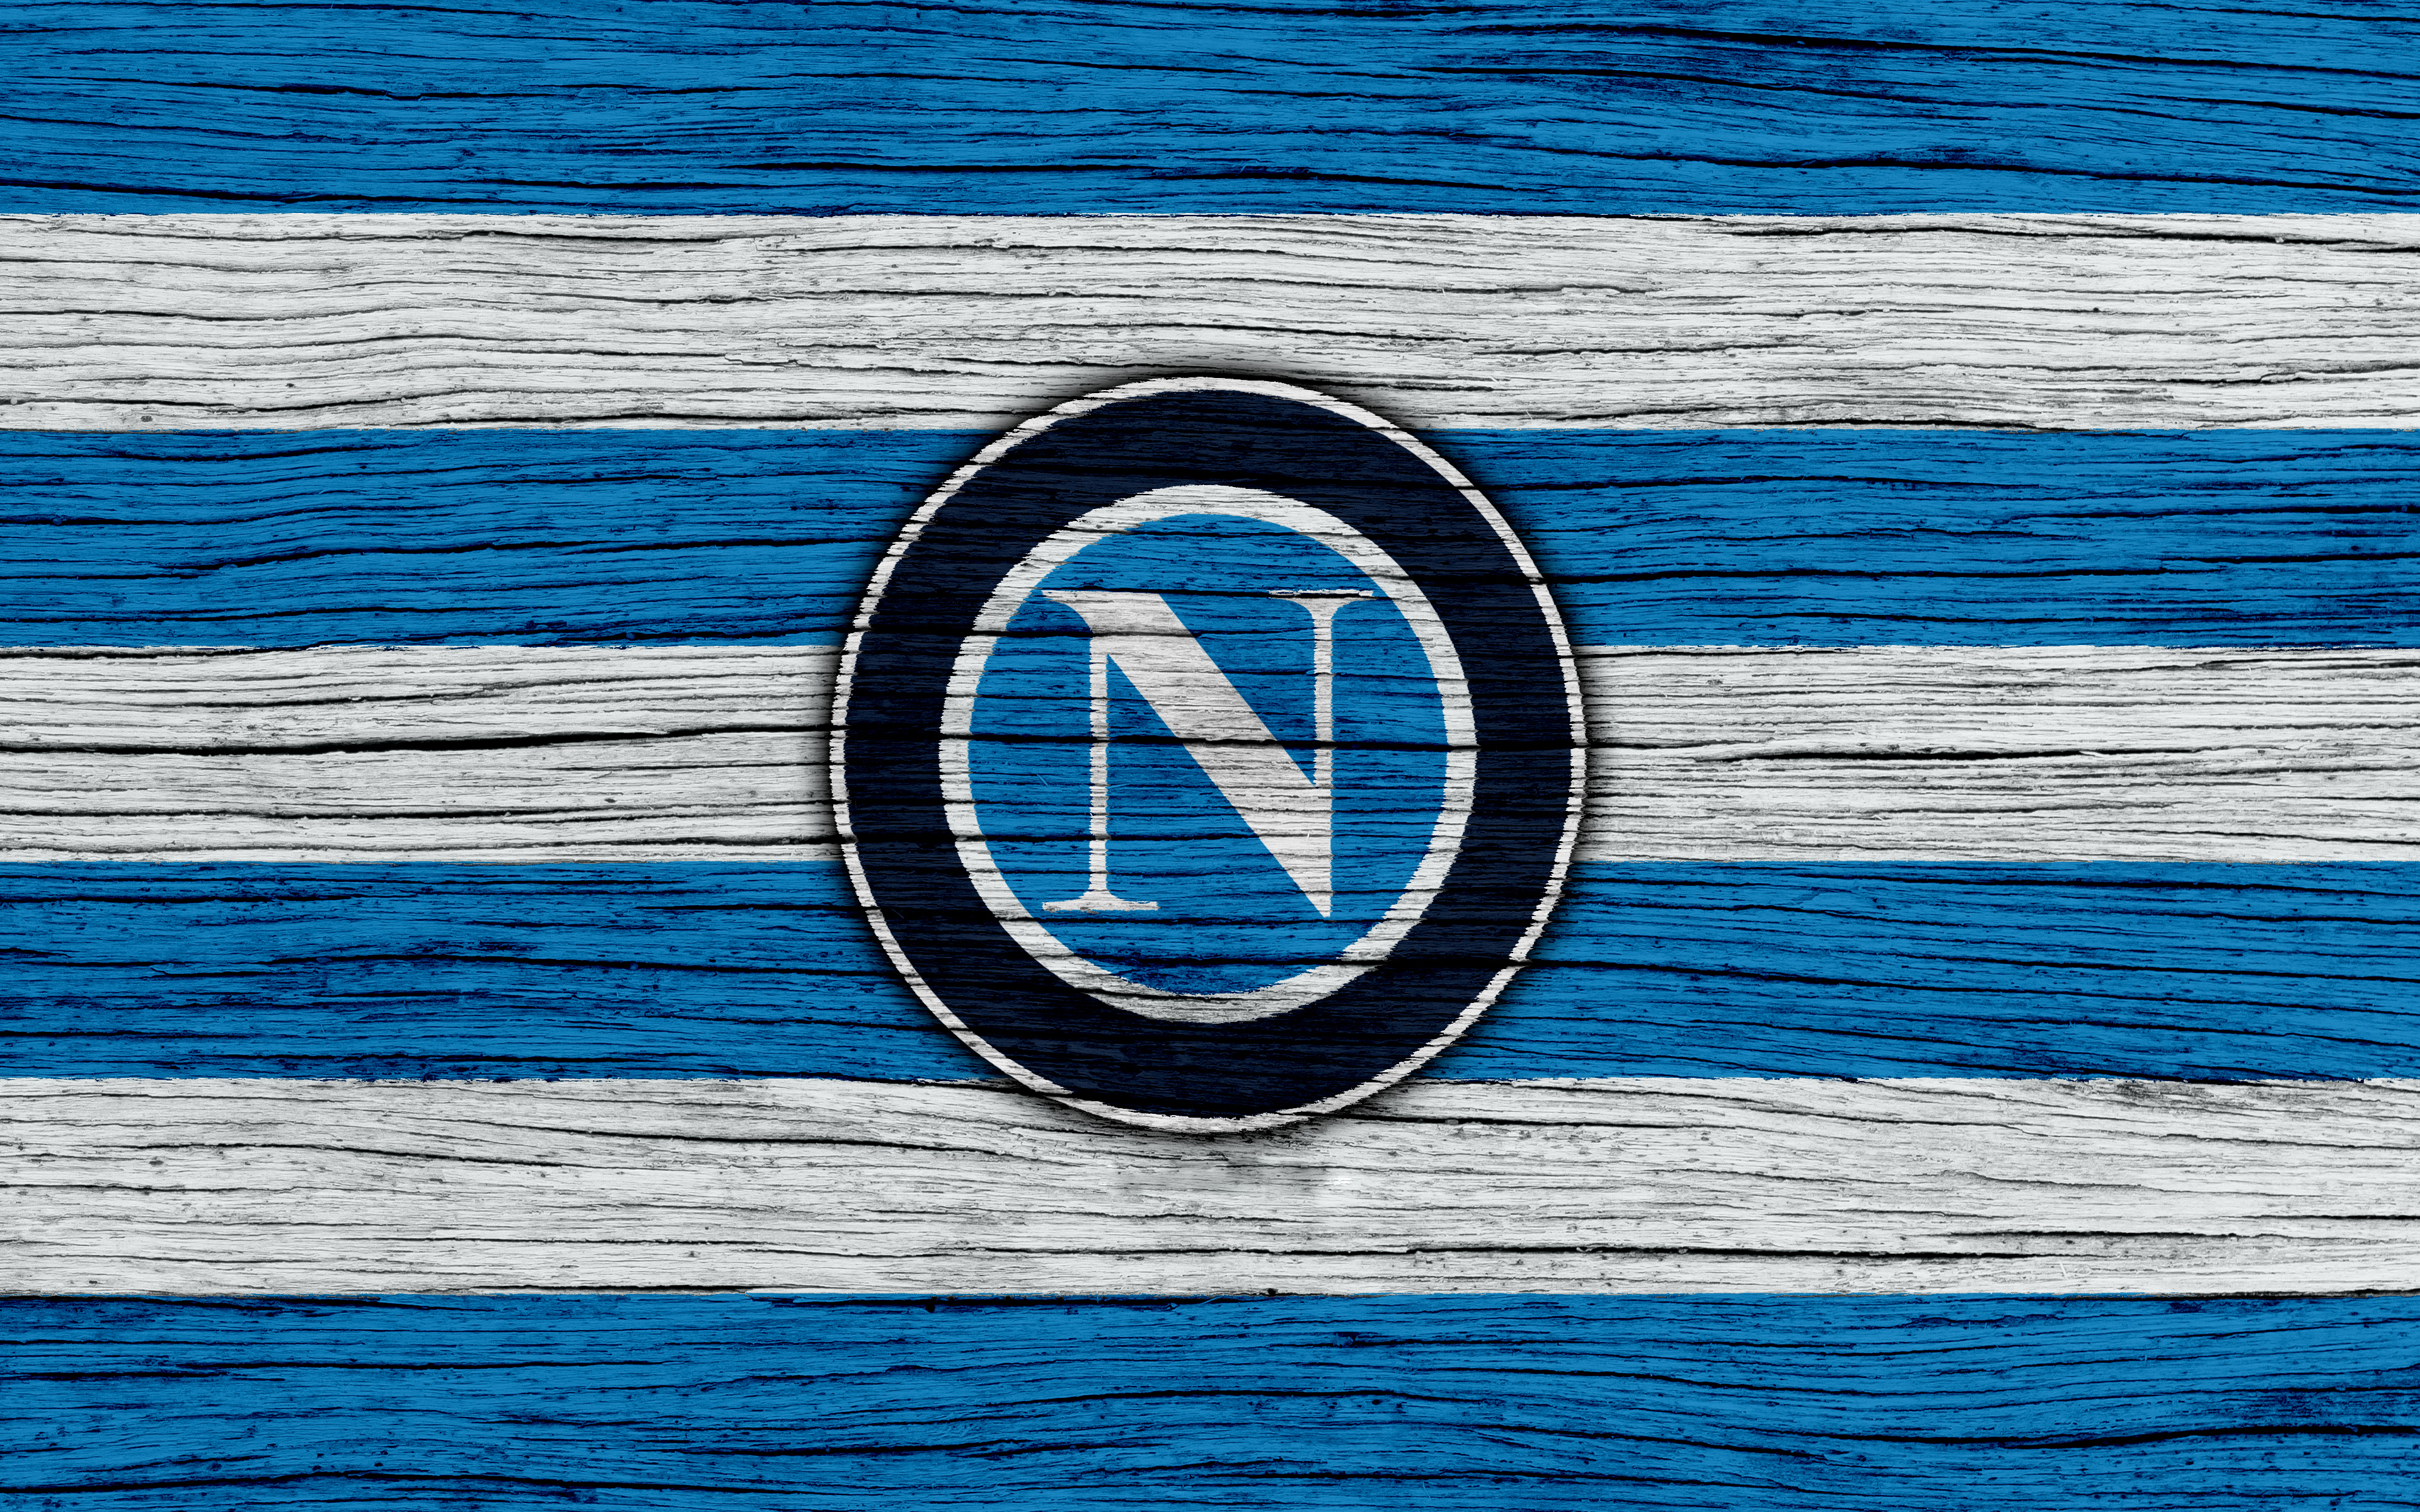 Napoli Logo 4k Ultra HD Wallpaper Background Image